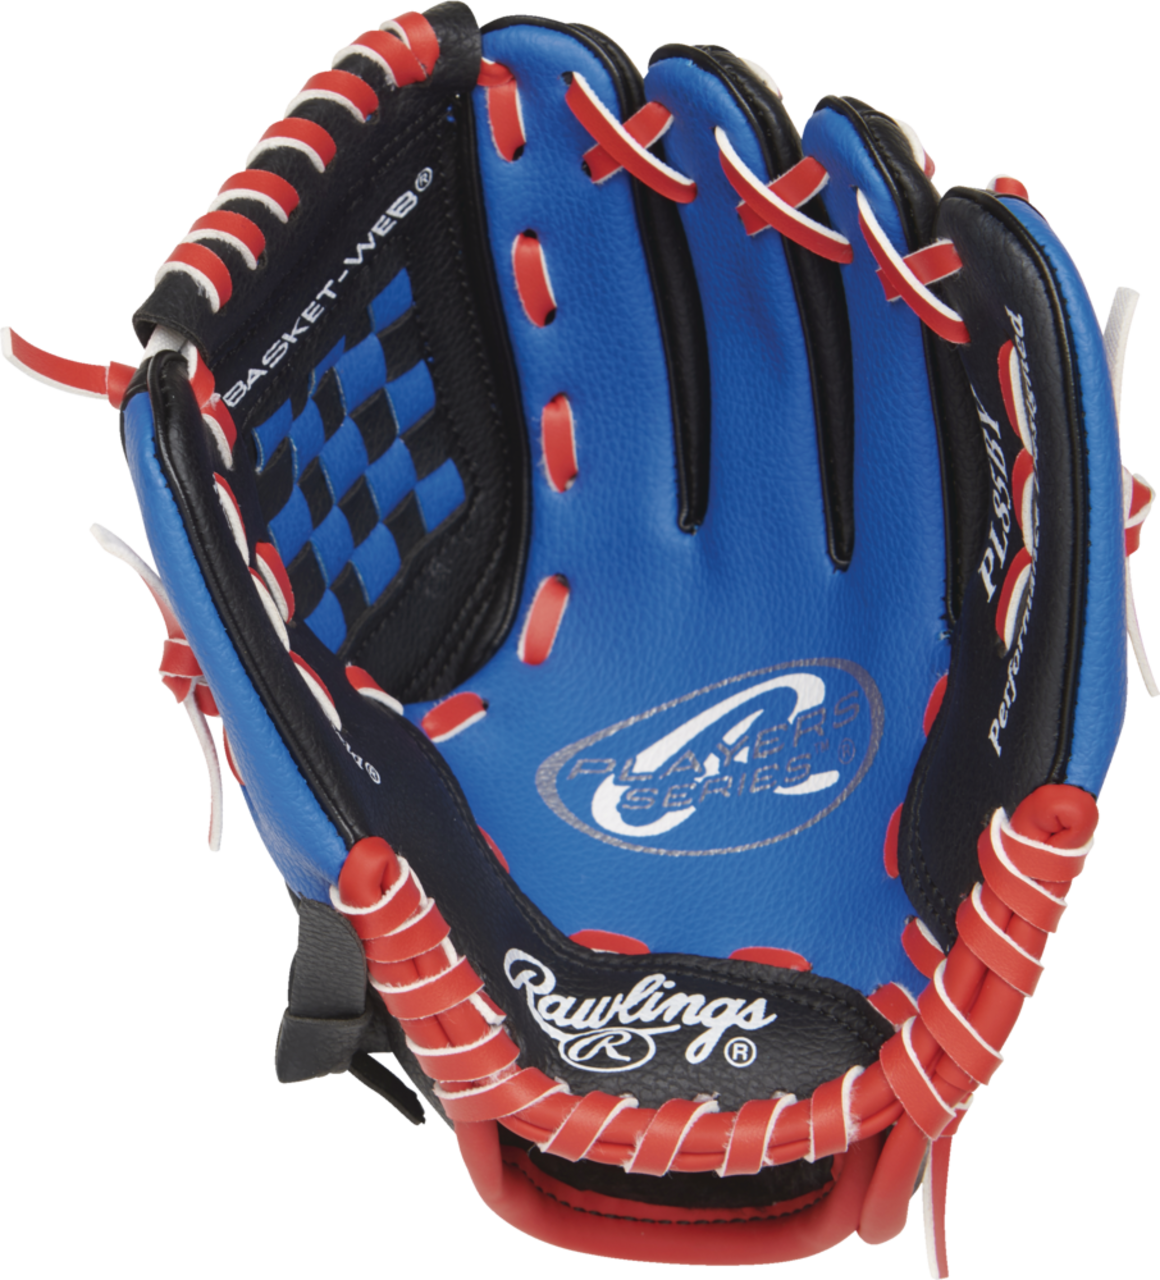 Rawlings Player Series Baseball Glove, Youth, Blue/Black/Red, 8.5